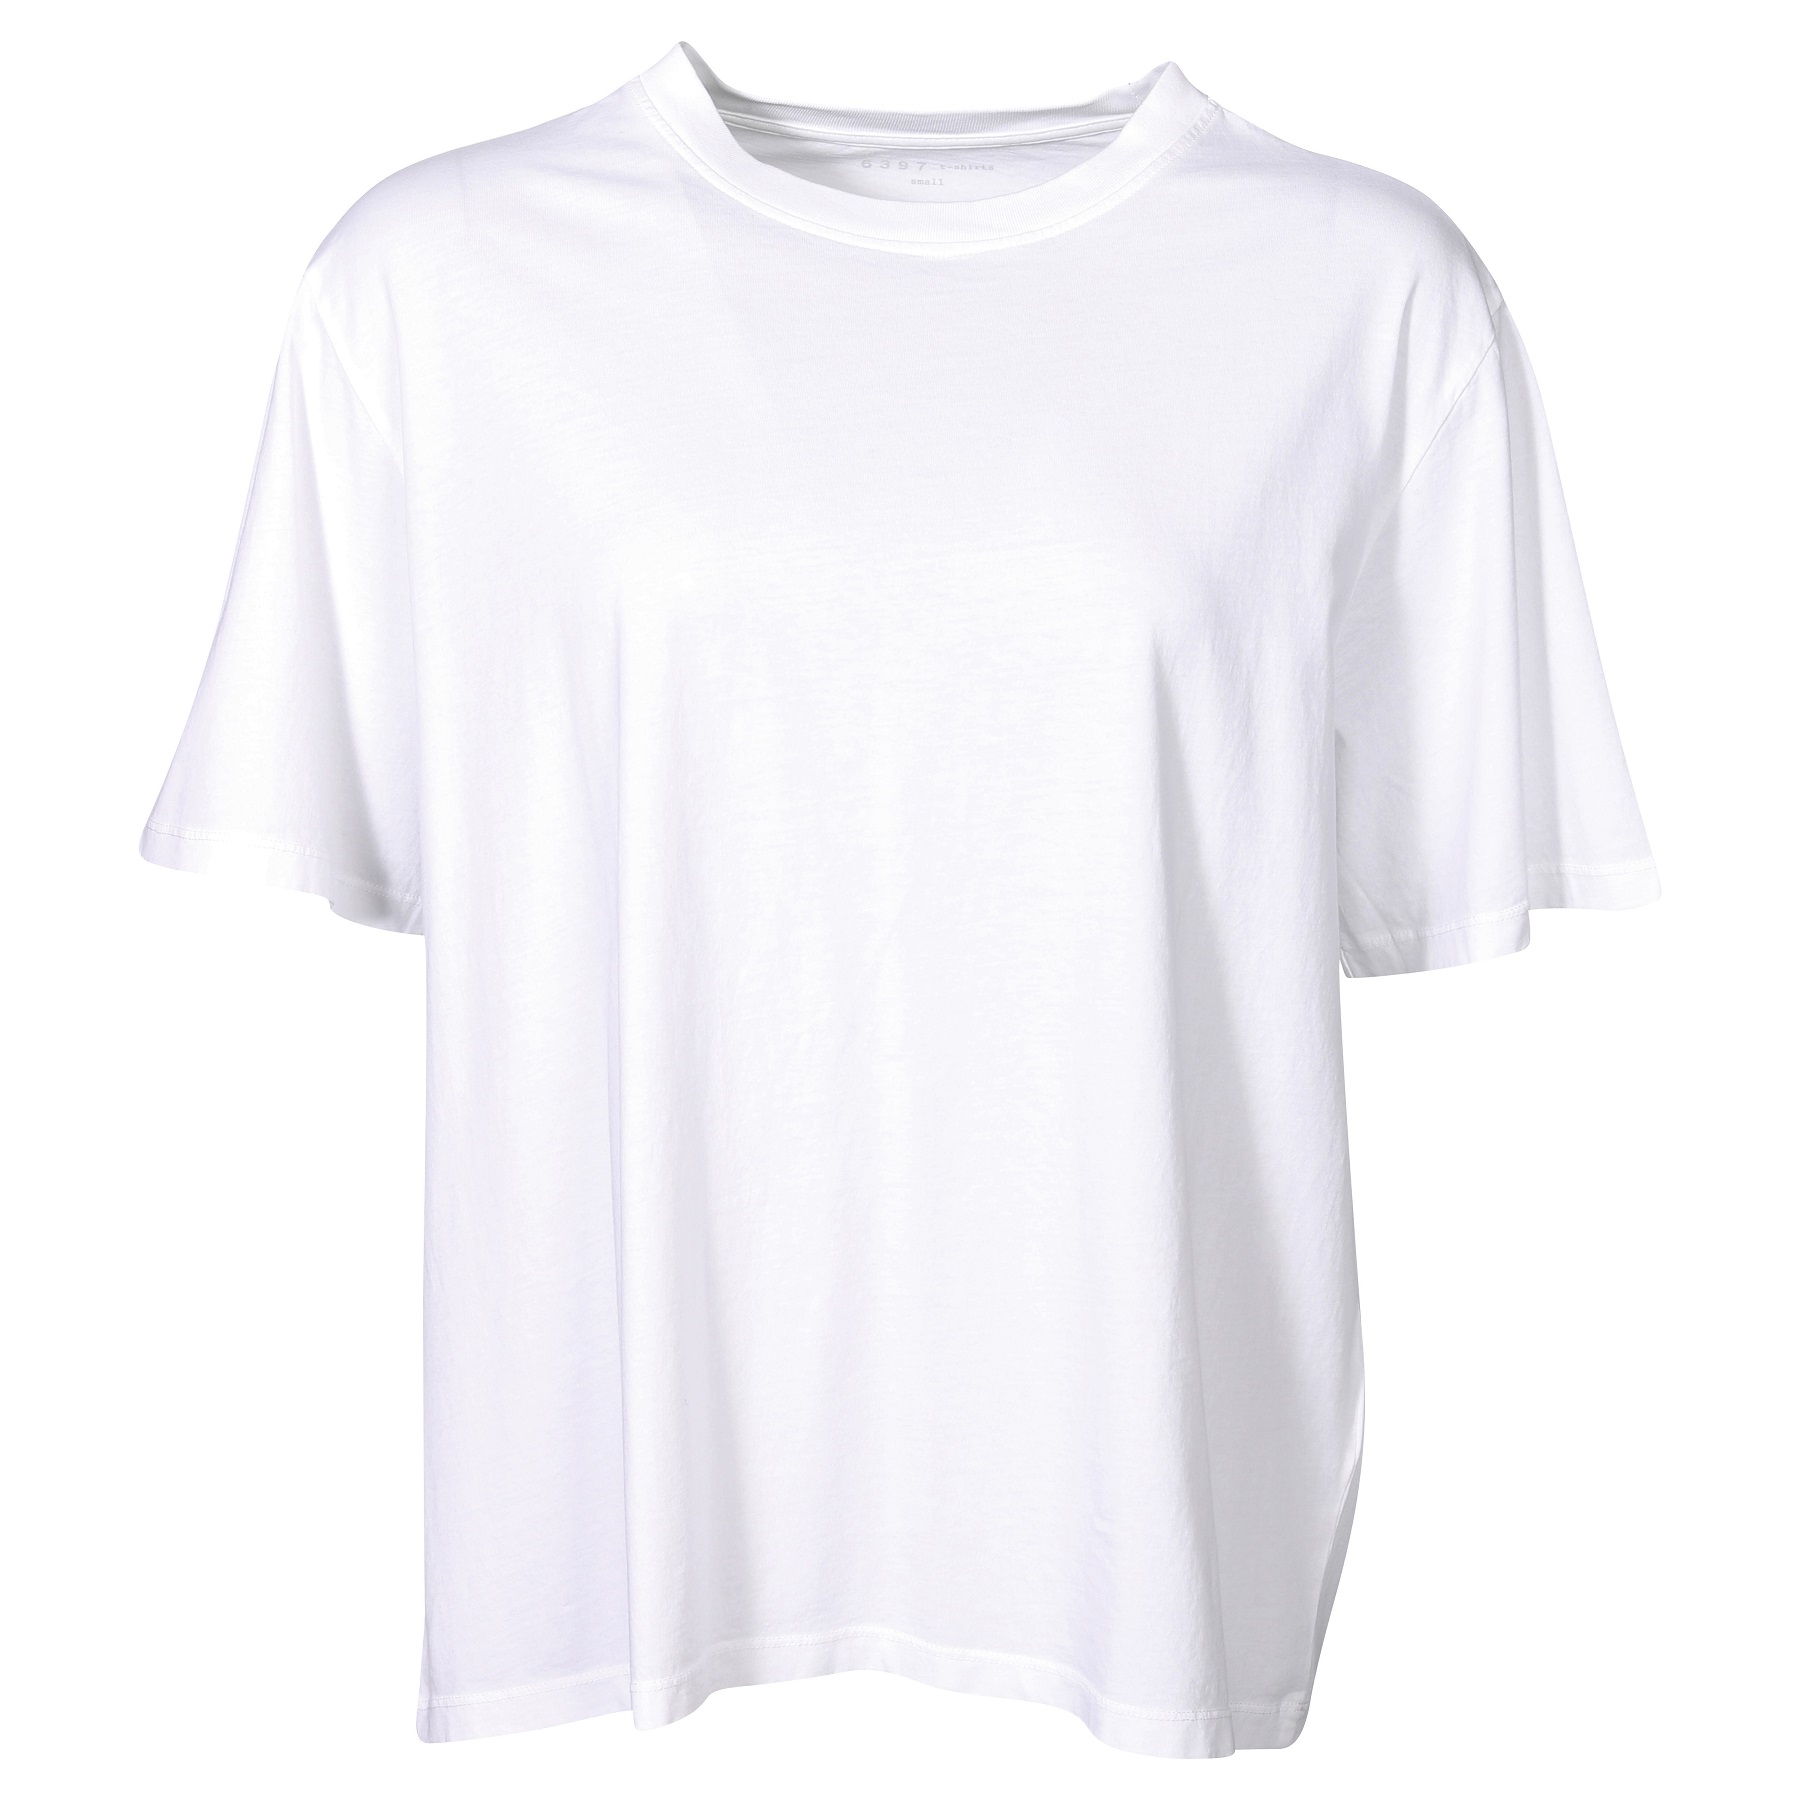 6397 Oversize T-Shirt in White S